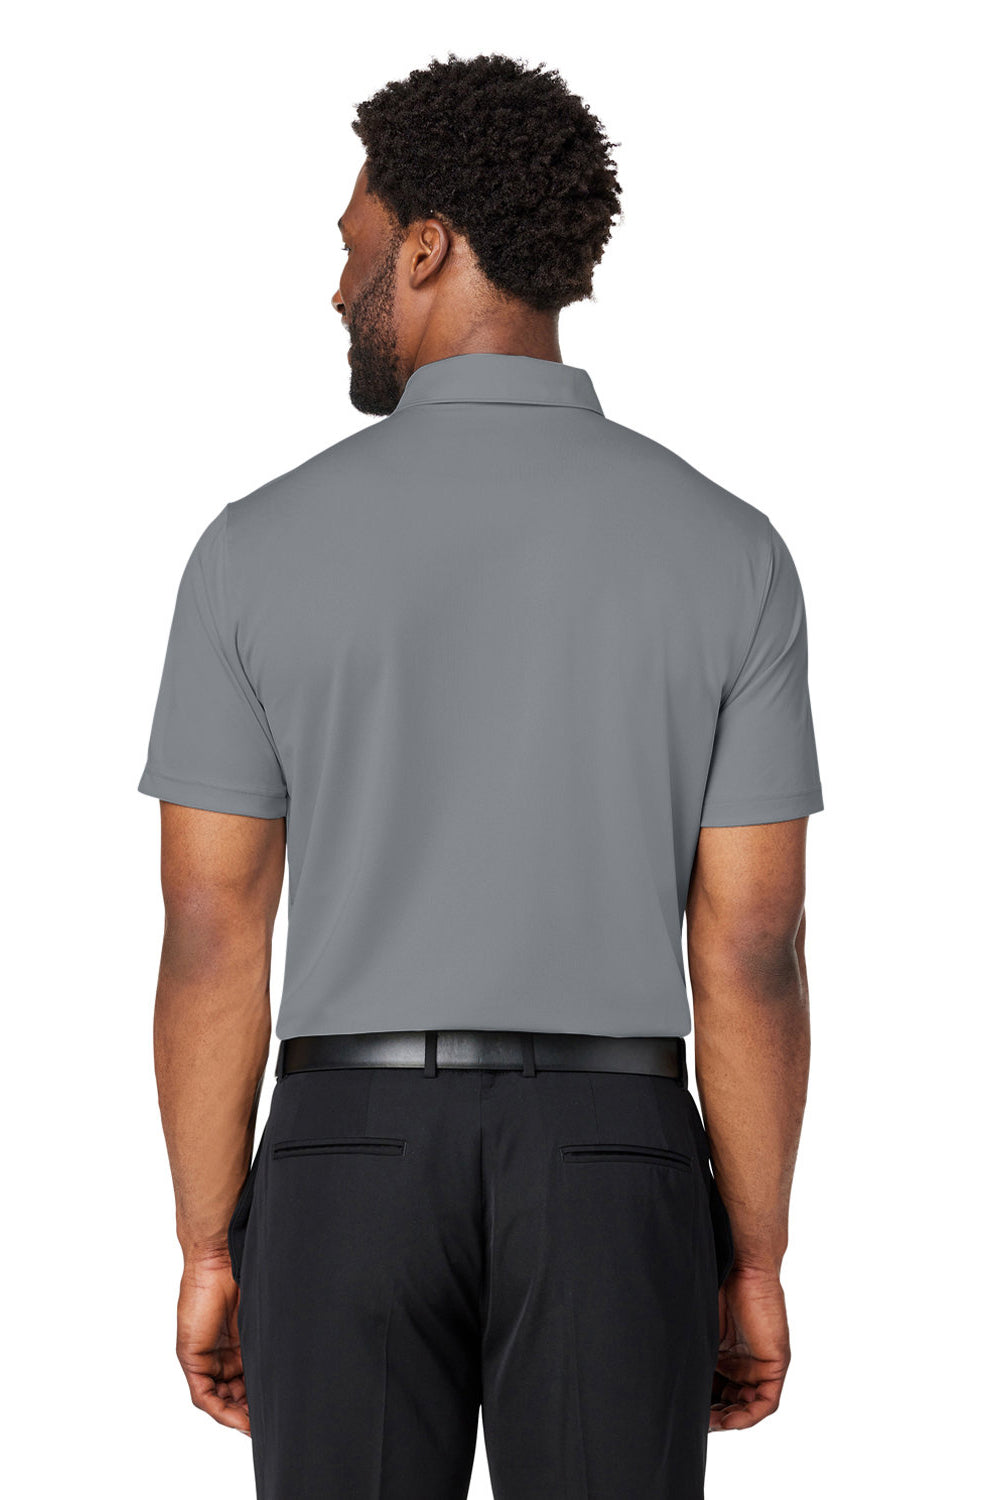 Puma 599120 Mens Gamer Short Sleeve Polo Shirt Quiet Shade Grey Back